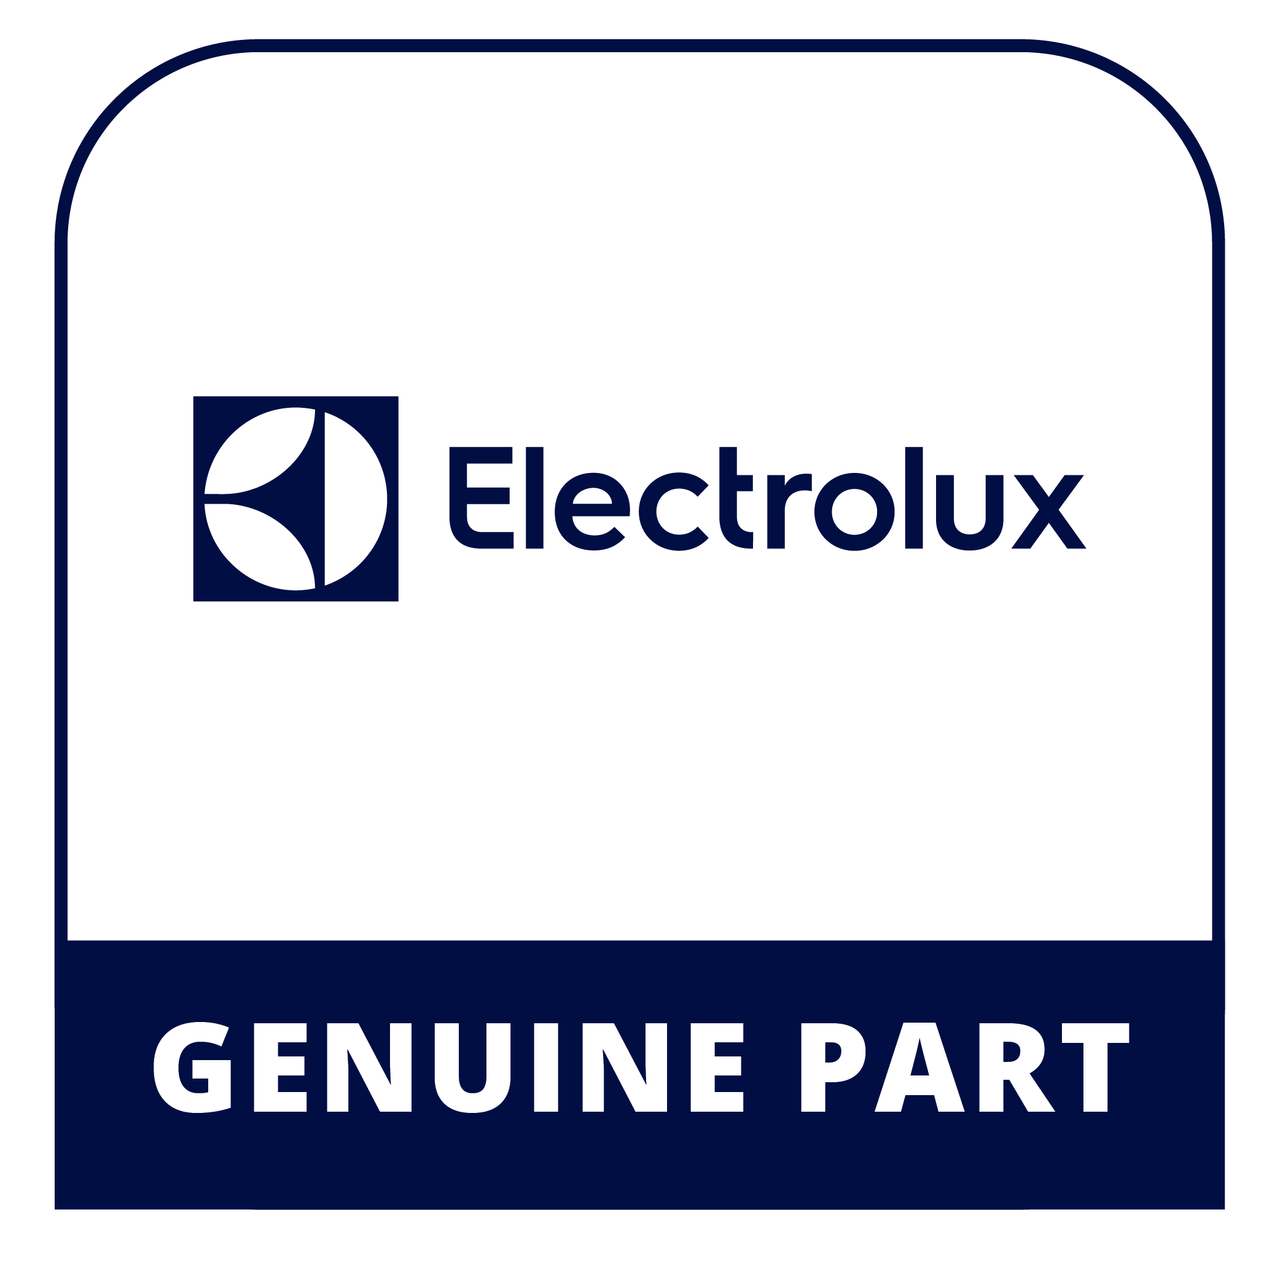 Frigidaire - Electrolux 316442500 - Knob - Genuine Electrolux Part